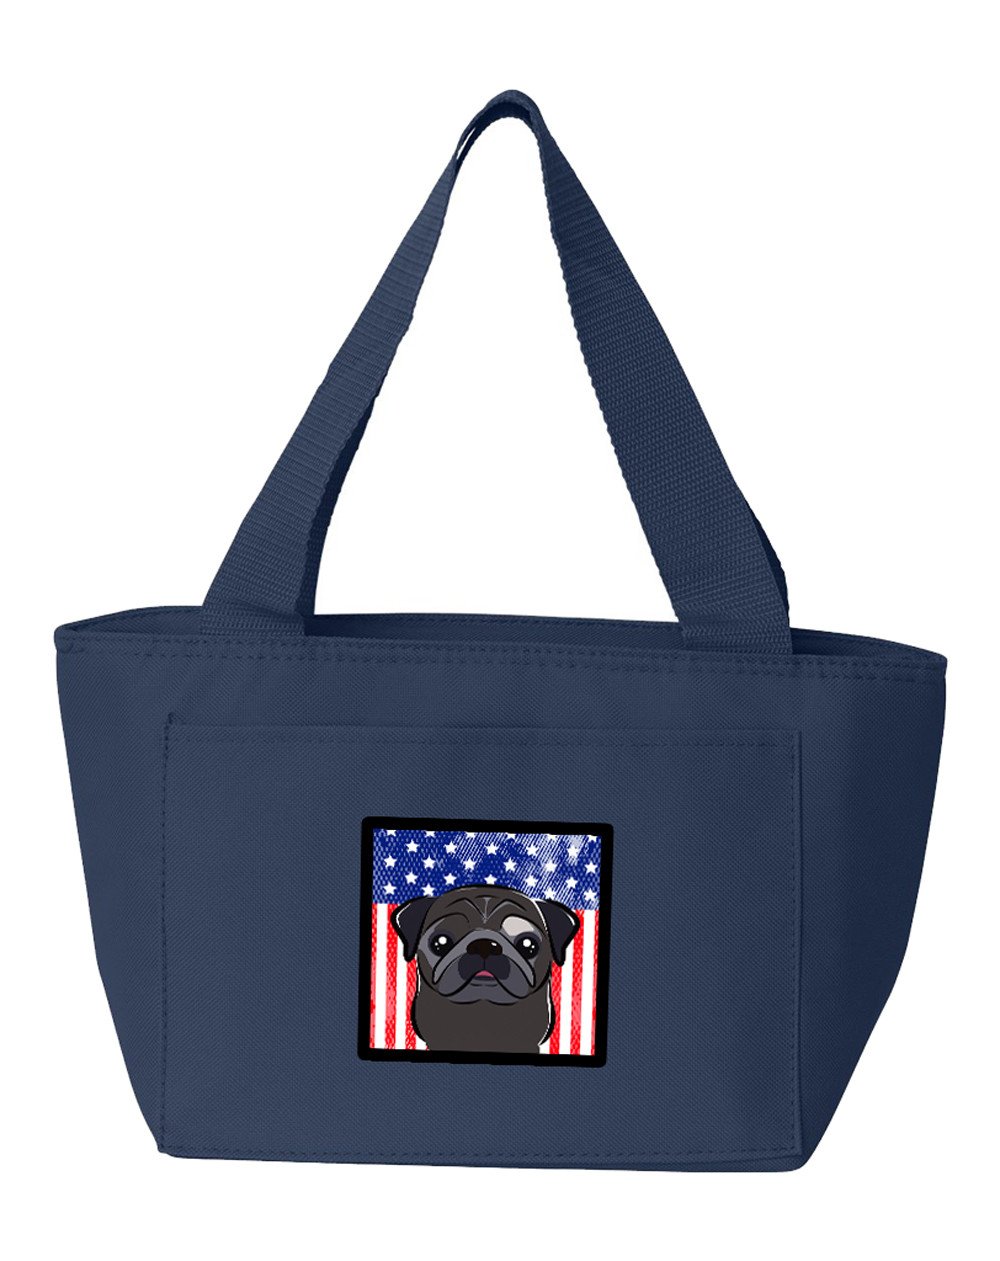 American Flag and Black Pug Lunch Bag BB2193NA-8808 by Caroline's Treasures